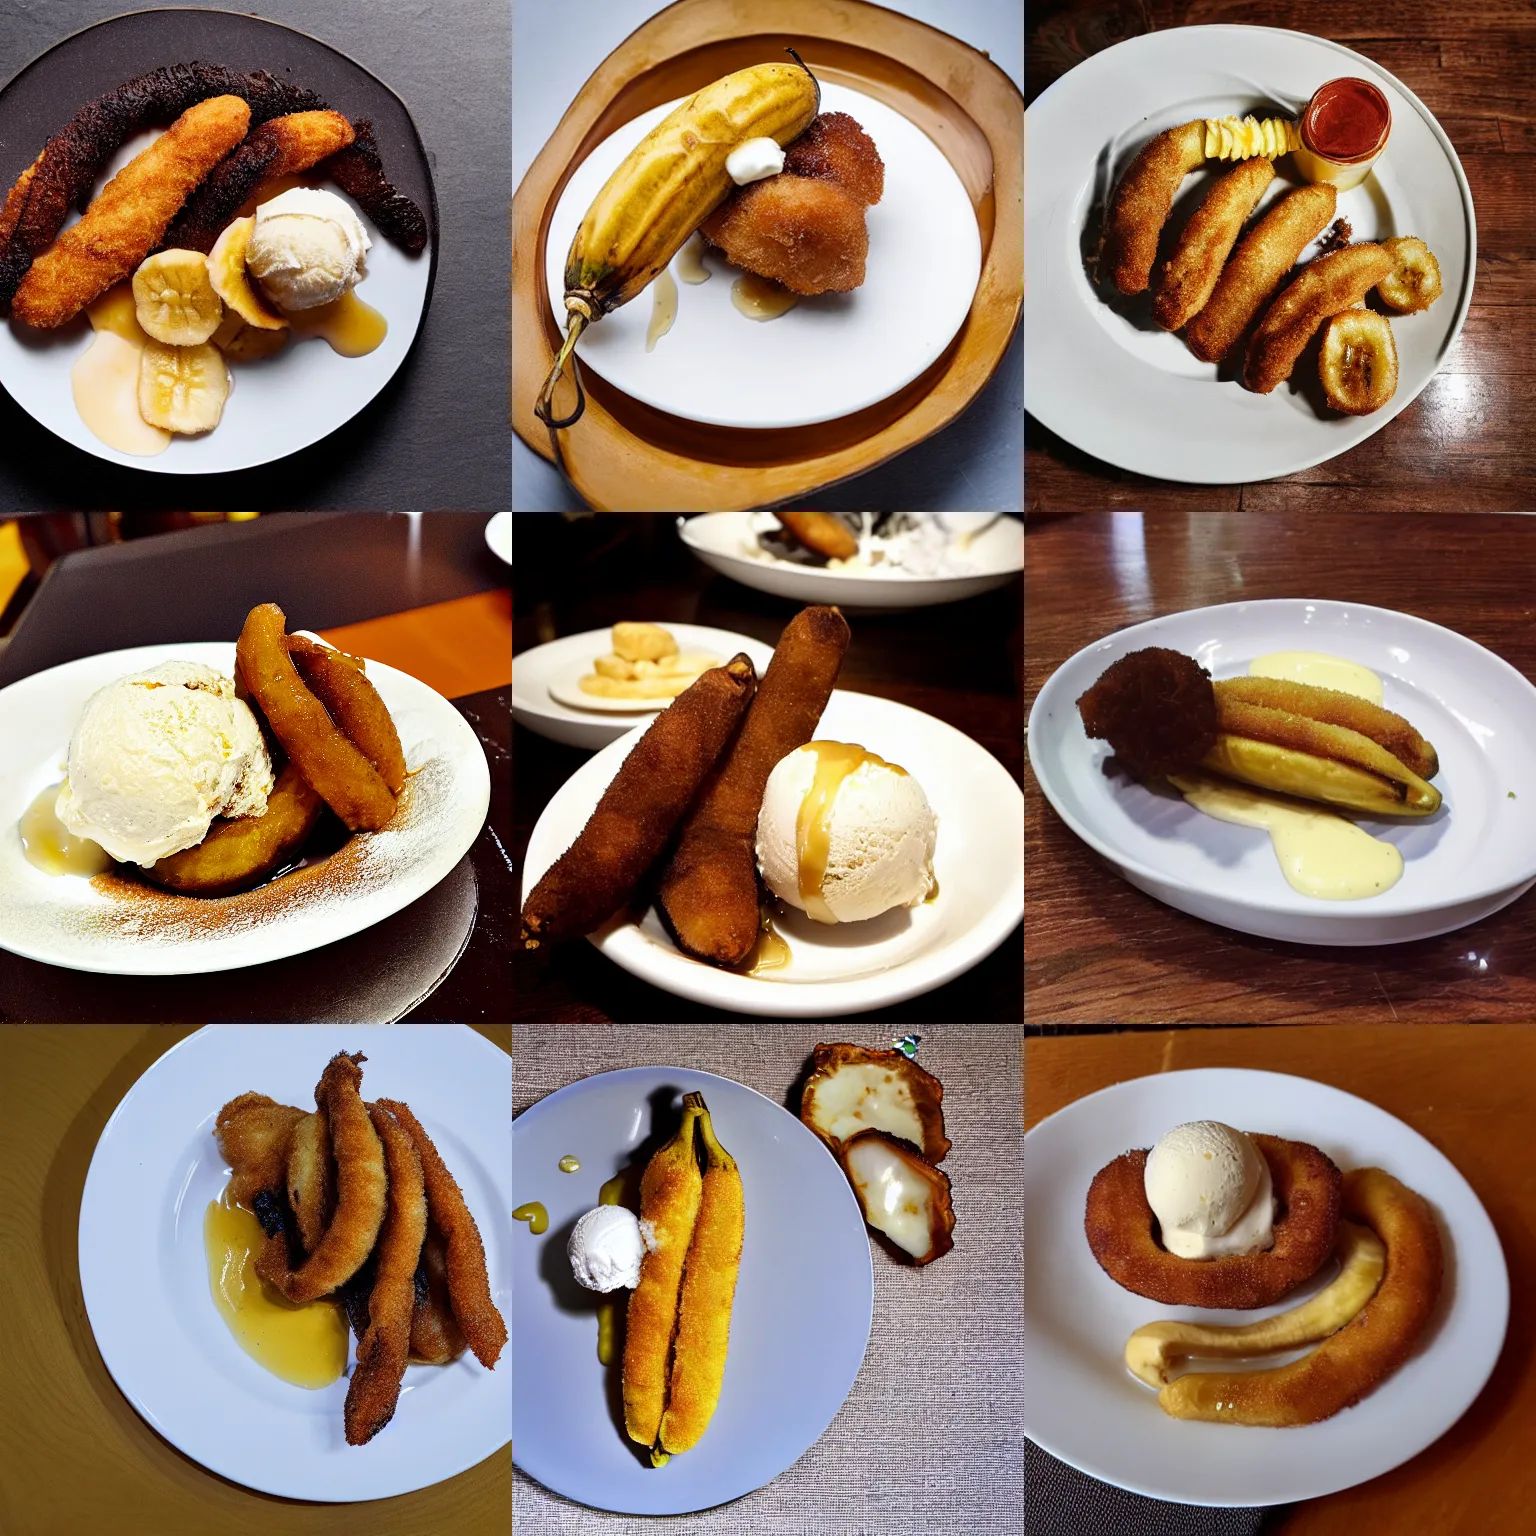 Prompt: fried Banana with Vanilla Ice-cream, Michelin star, award winning